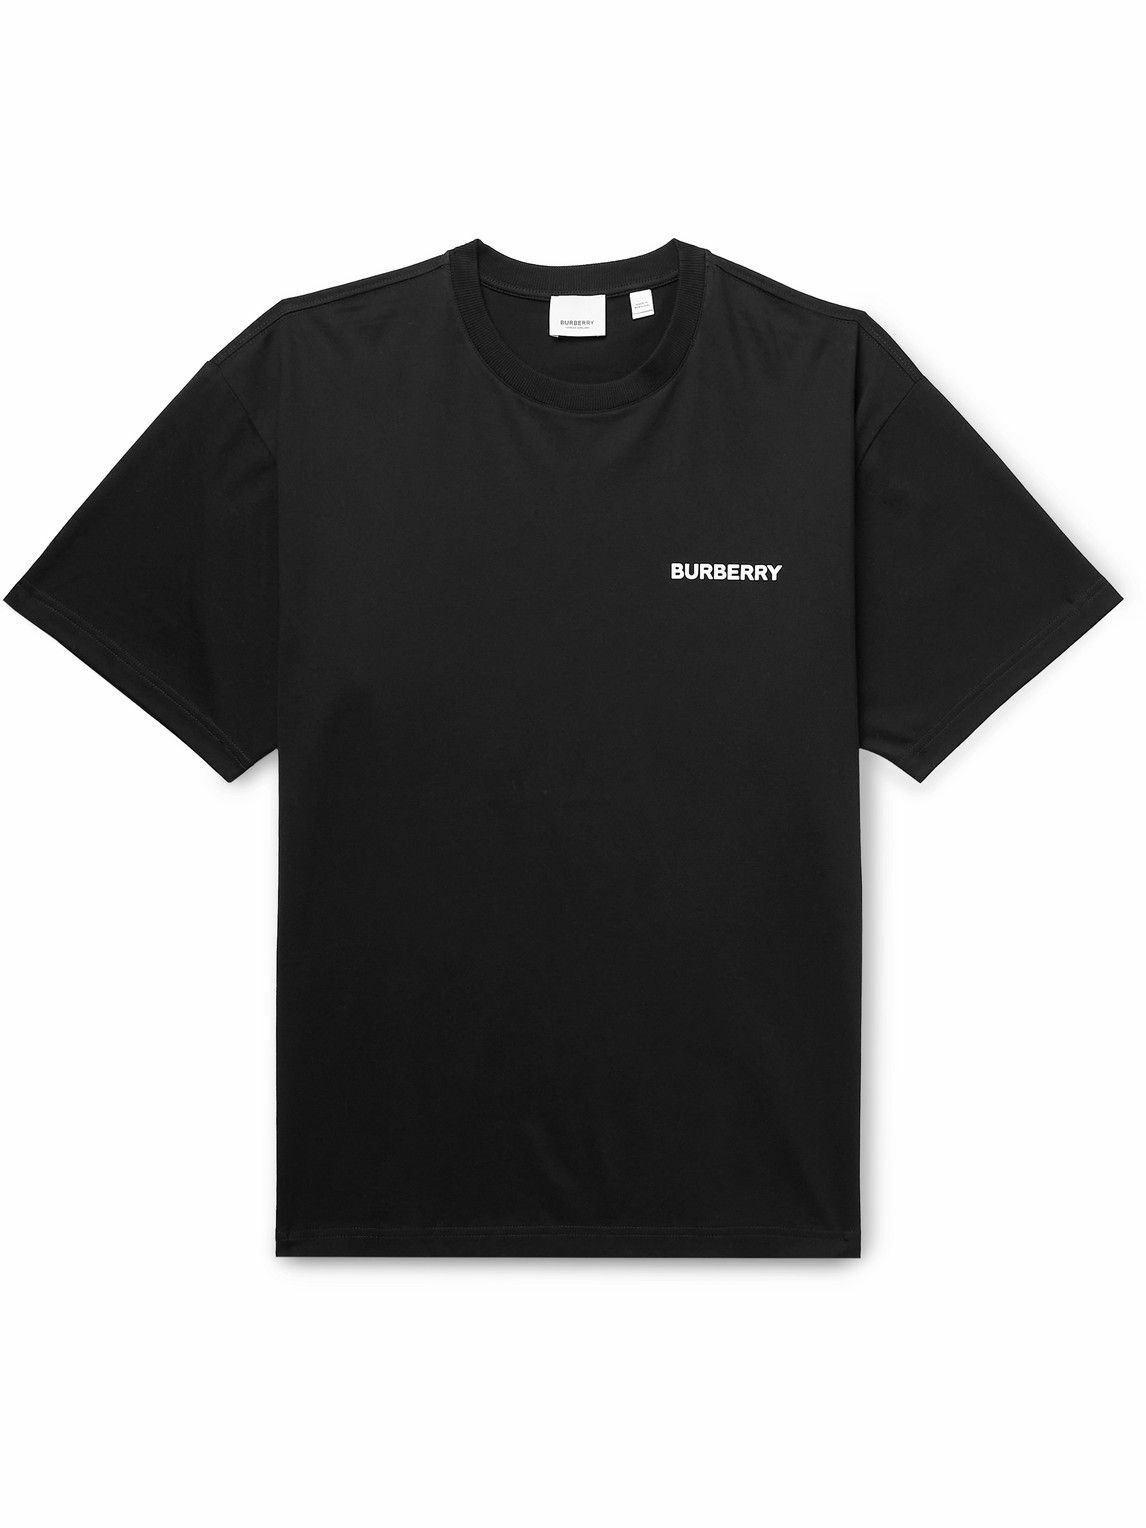 Burberry - Logo-Print Cotton-Blend Jersey T-Shirt - Black Burberry